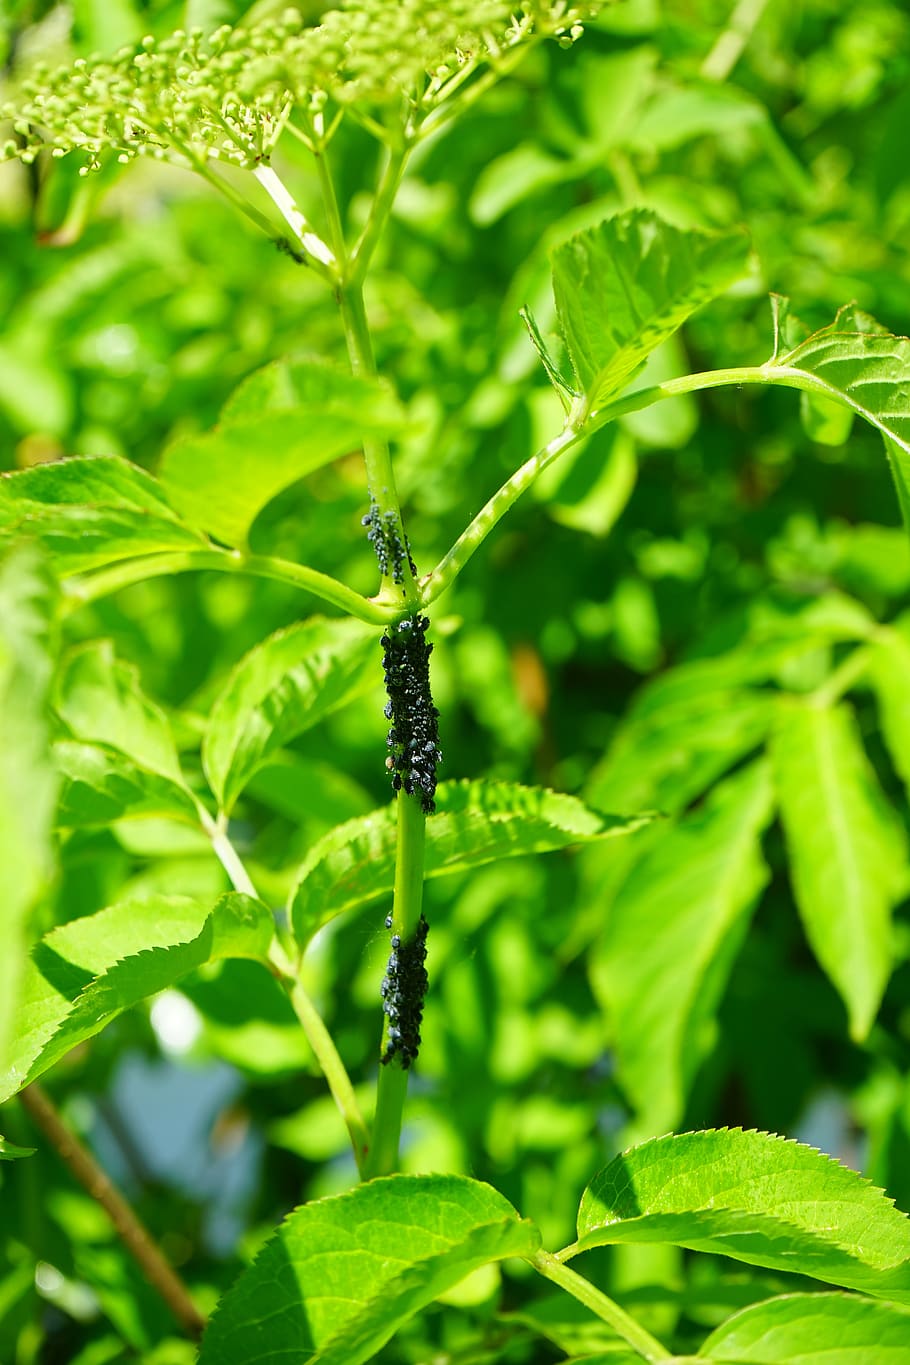 black elder aphids, lice, pests, infestation, vermin, aphis sambuci, HD wallpaper